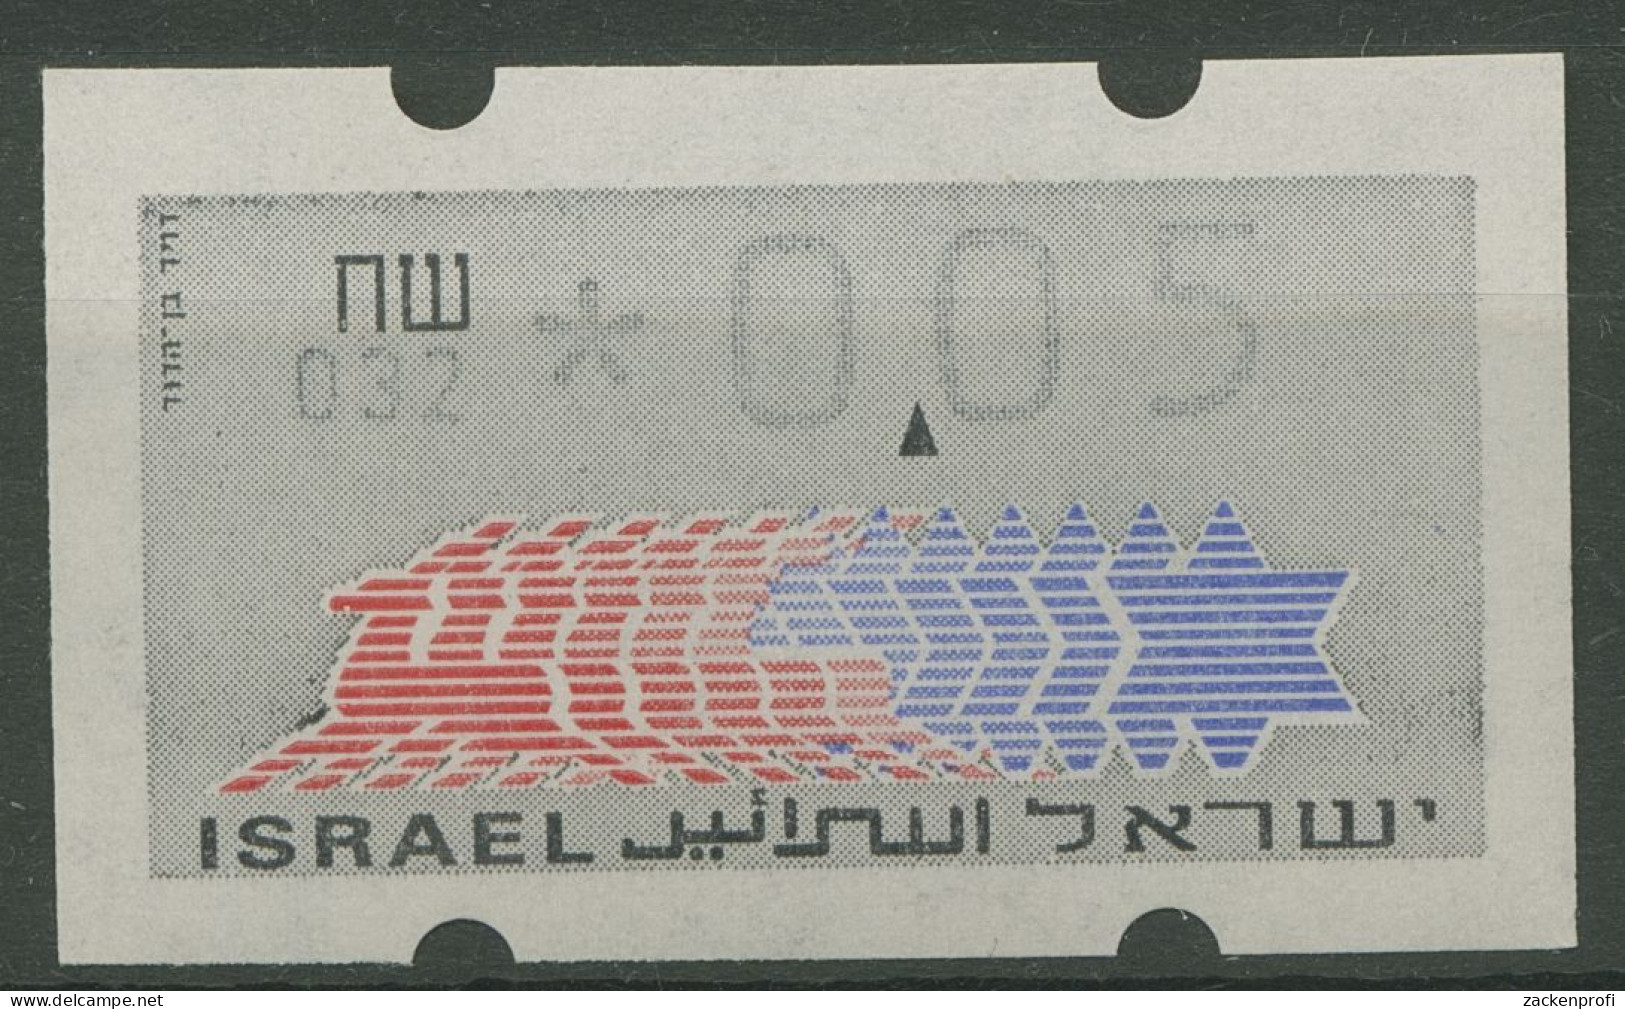 Israel ATM 1990 Hirsch Automat 032 Einzelwert ATM 3.3.32 Postfrisch - Vignettes D'affranchissement (Frama)